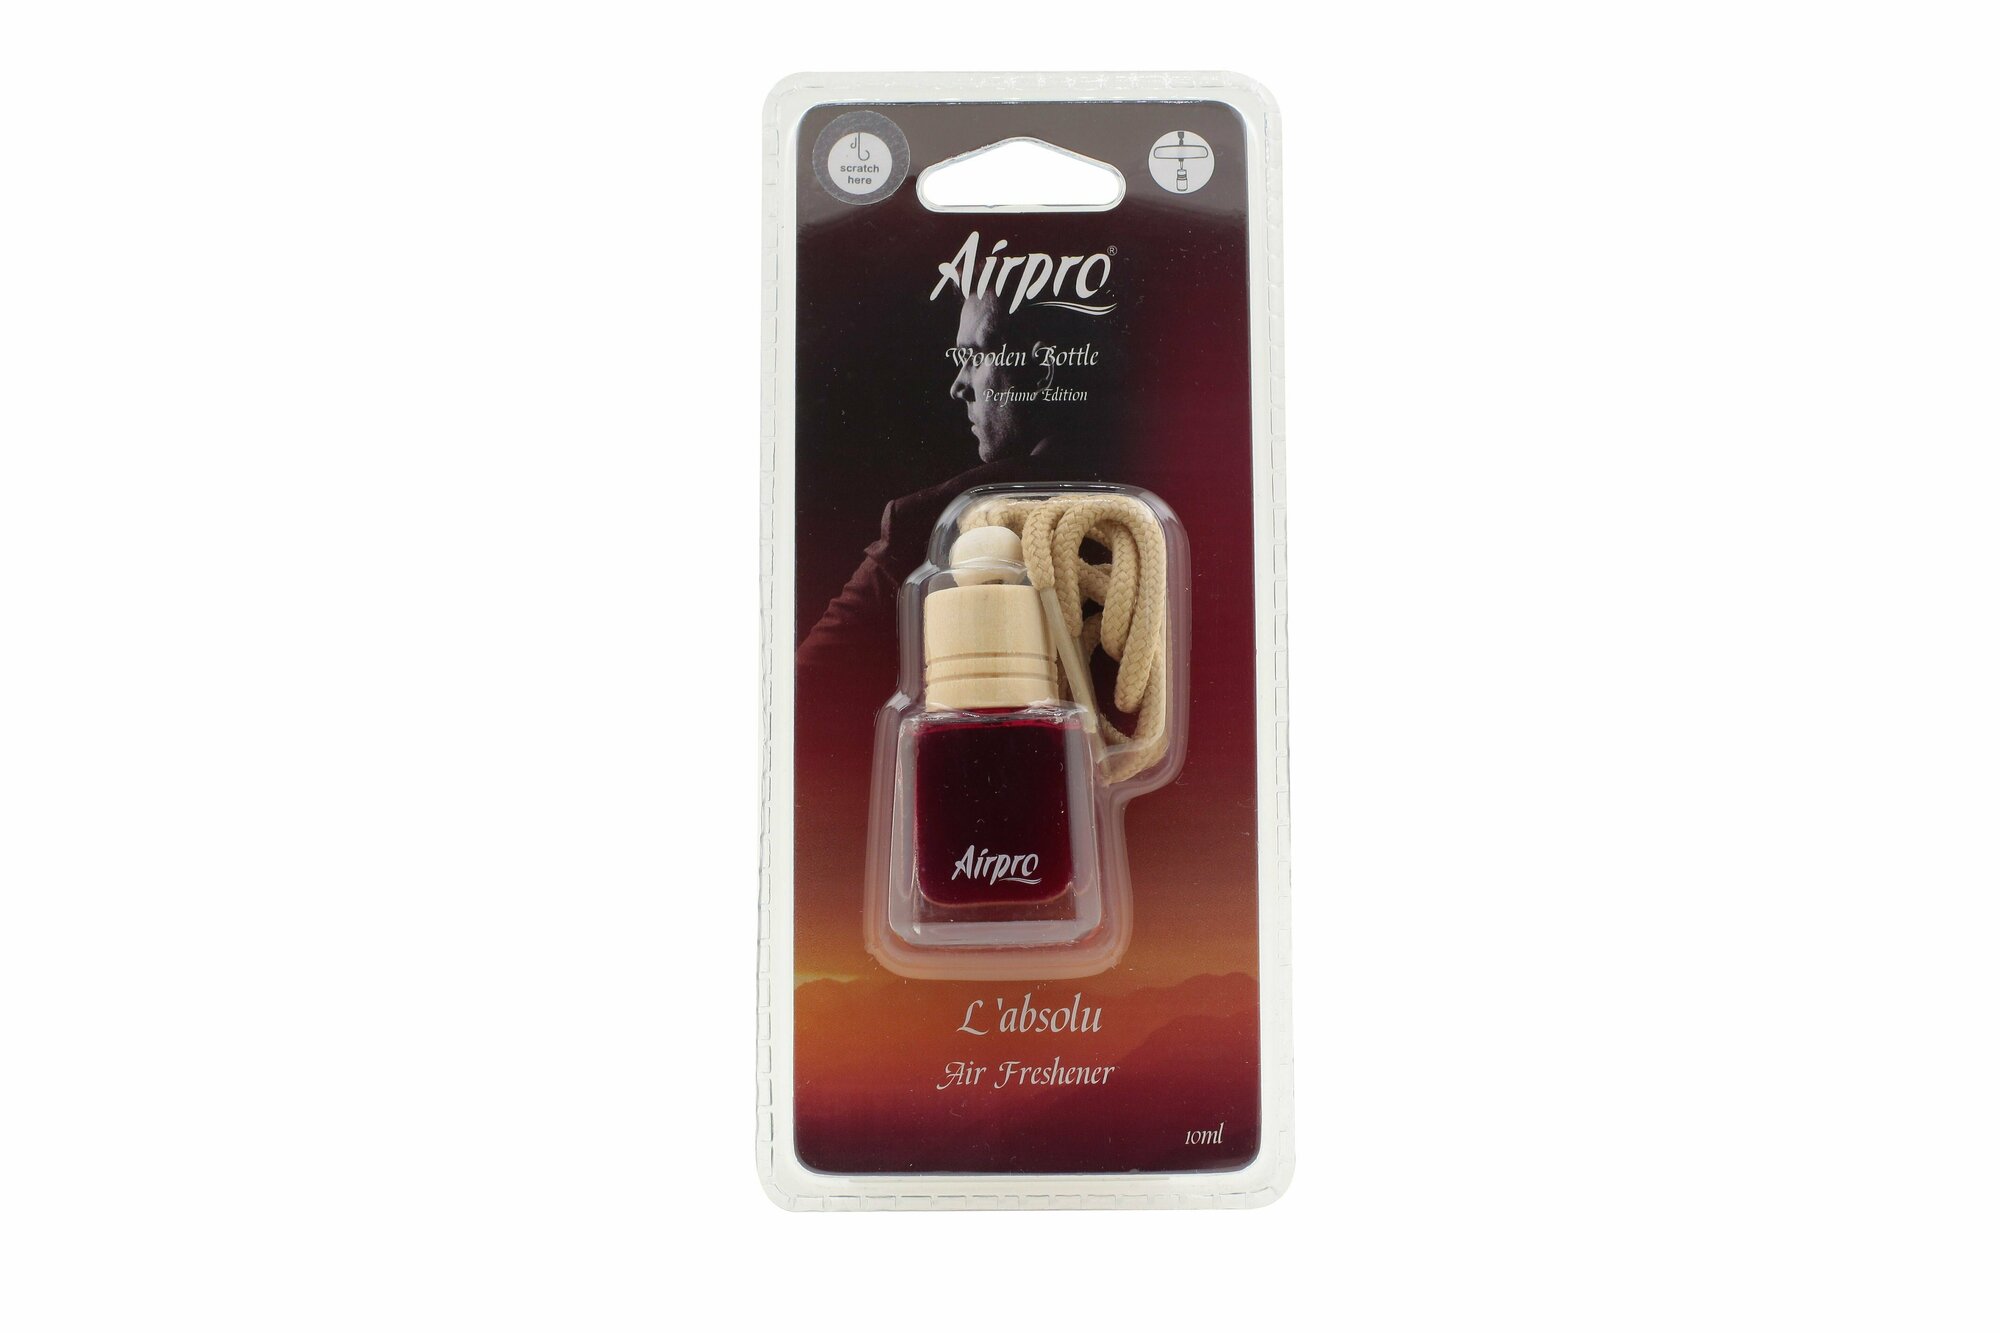 AirPro ароматизатор для автомобиля Wooden Bottle парфюм для автомобиля Air Freshener L'absolu